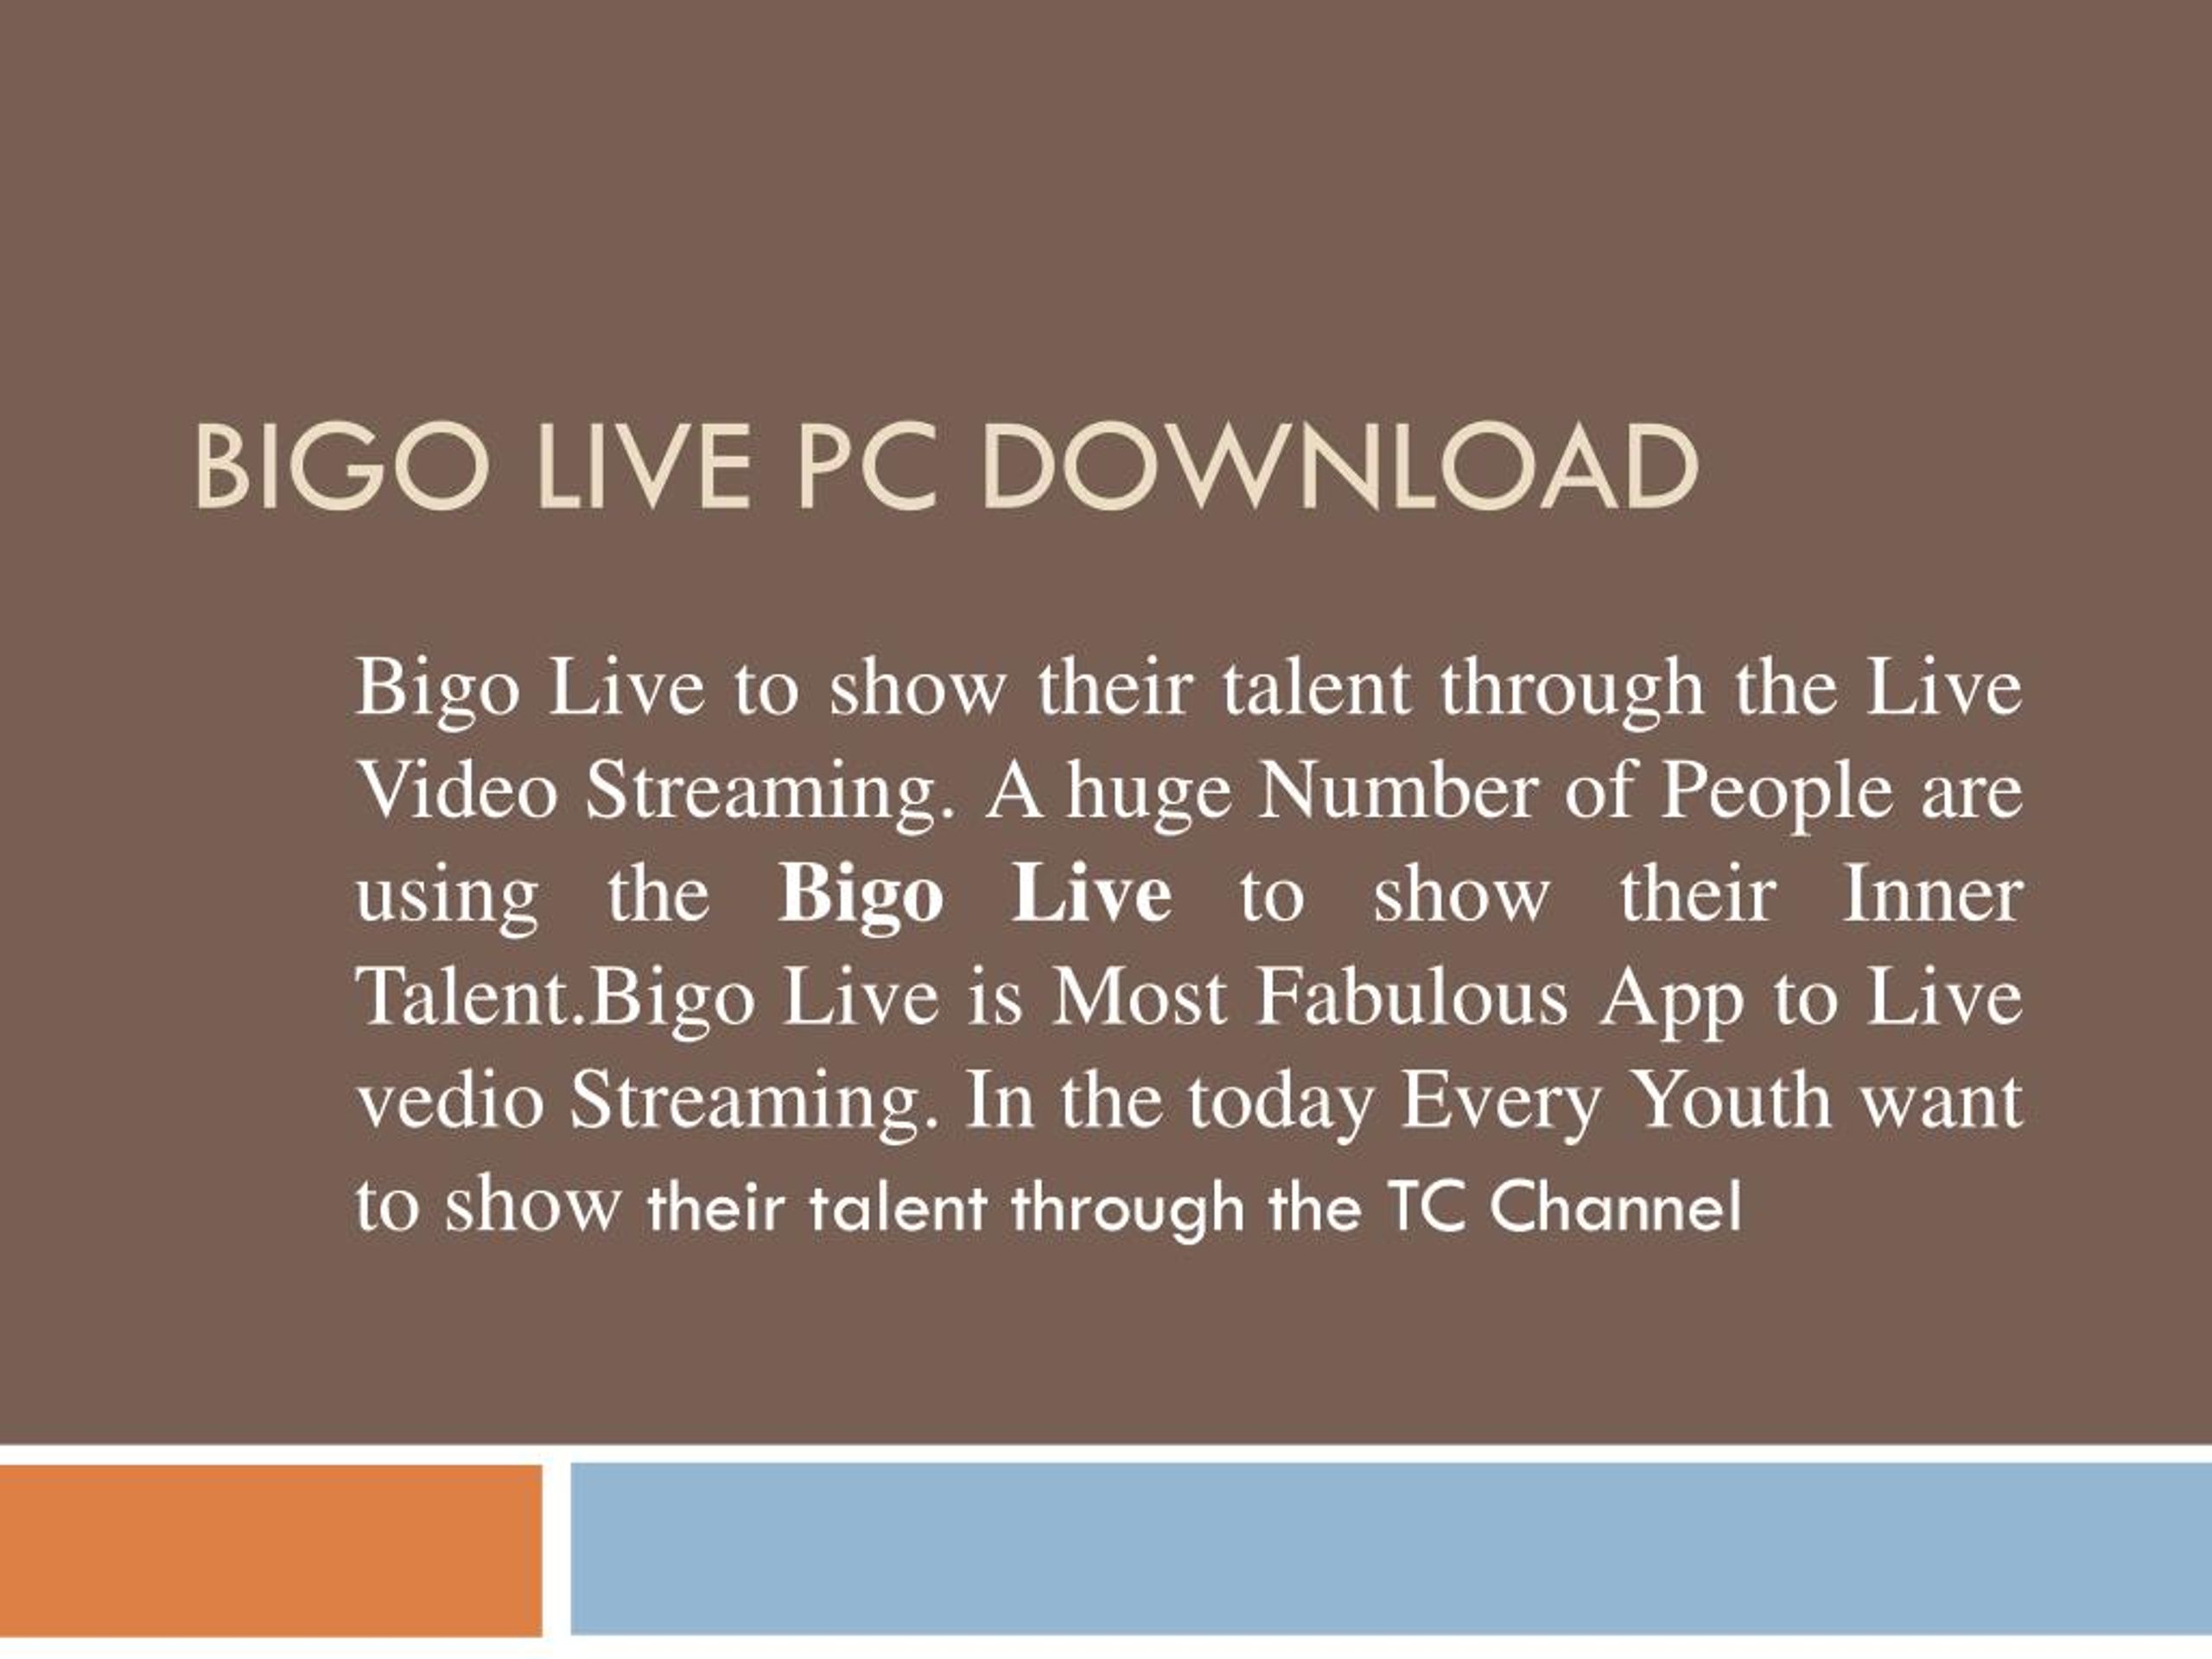 Ppt Bigo Live Pc Powerpoint Presentation Free Download Id 7925672